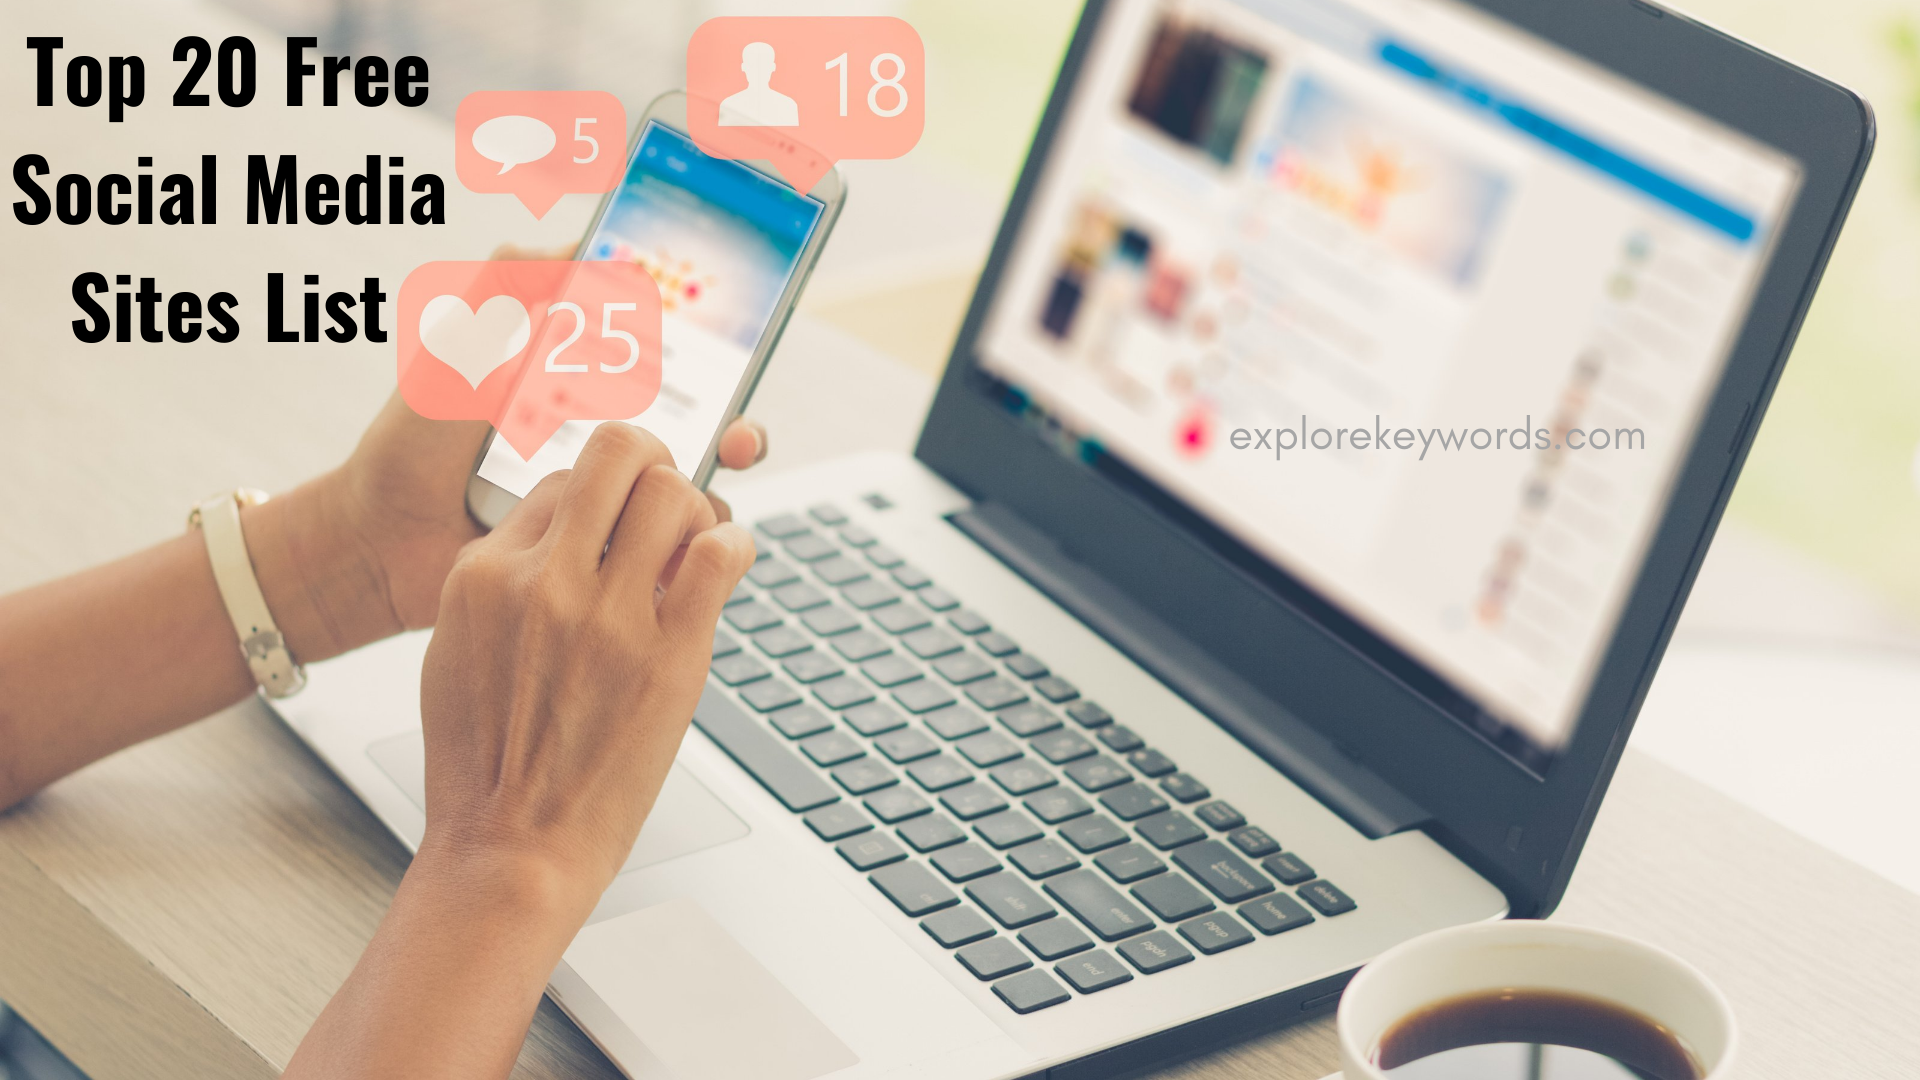 Top 20 Free Social Media Sites List